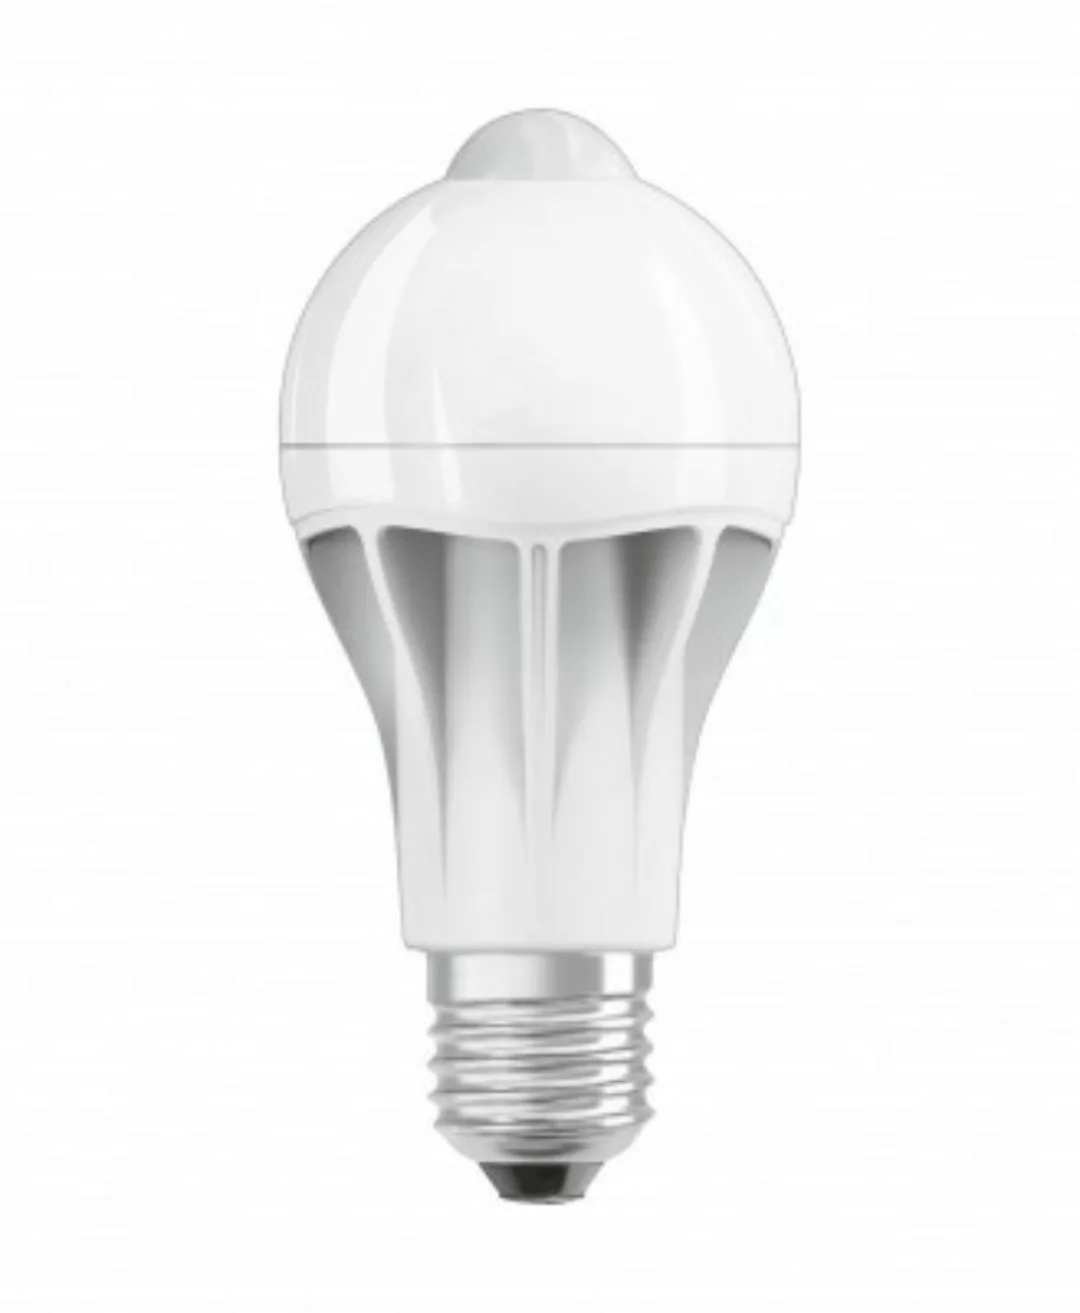 OSRAM LED MOTION SENSOR CLASSIC A 75 BLI K Warmweiß SMD Matt E27 Glühlampe günstig online kaufen